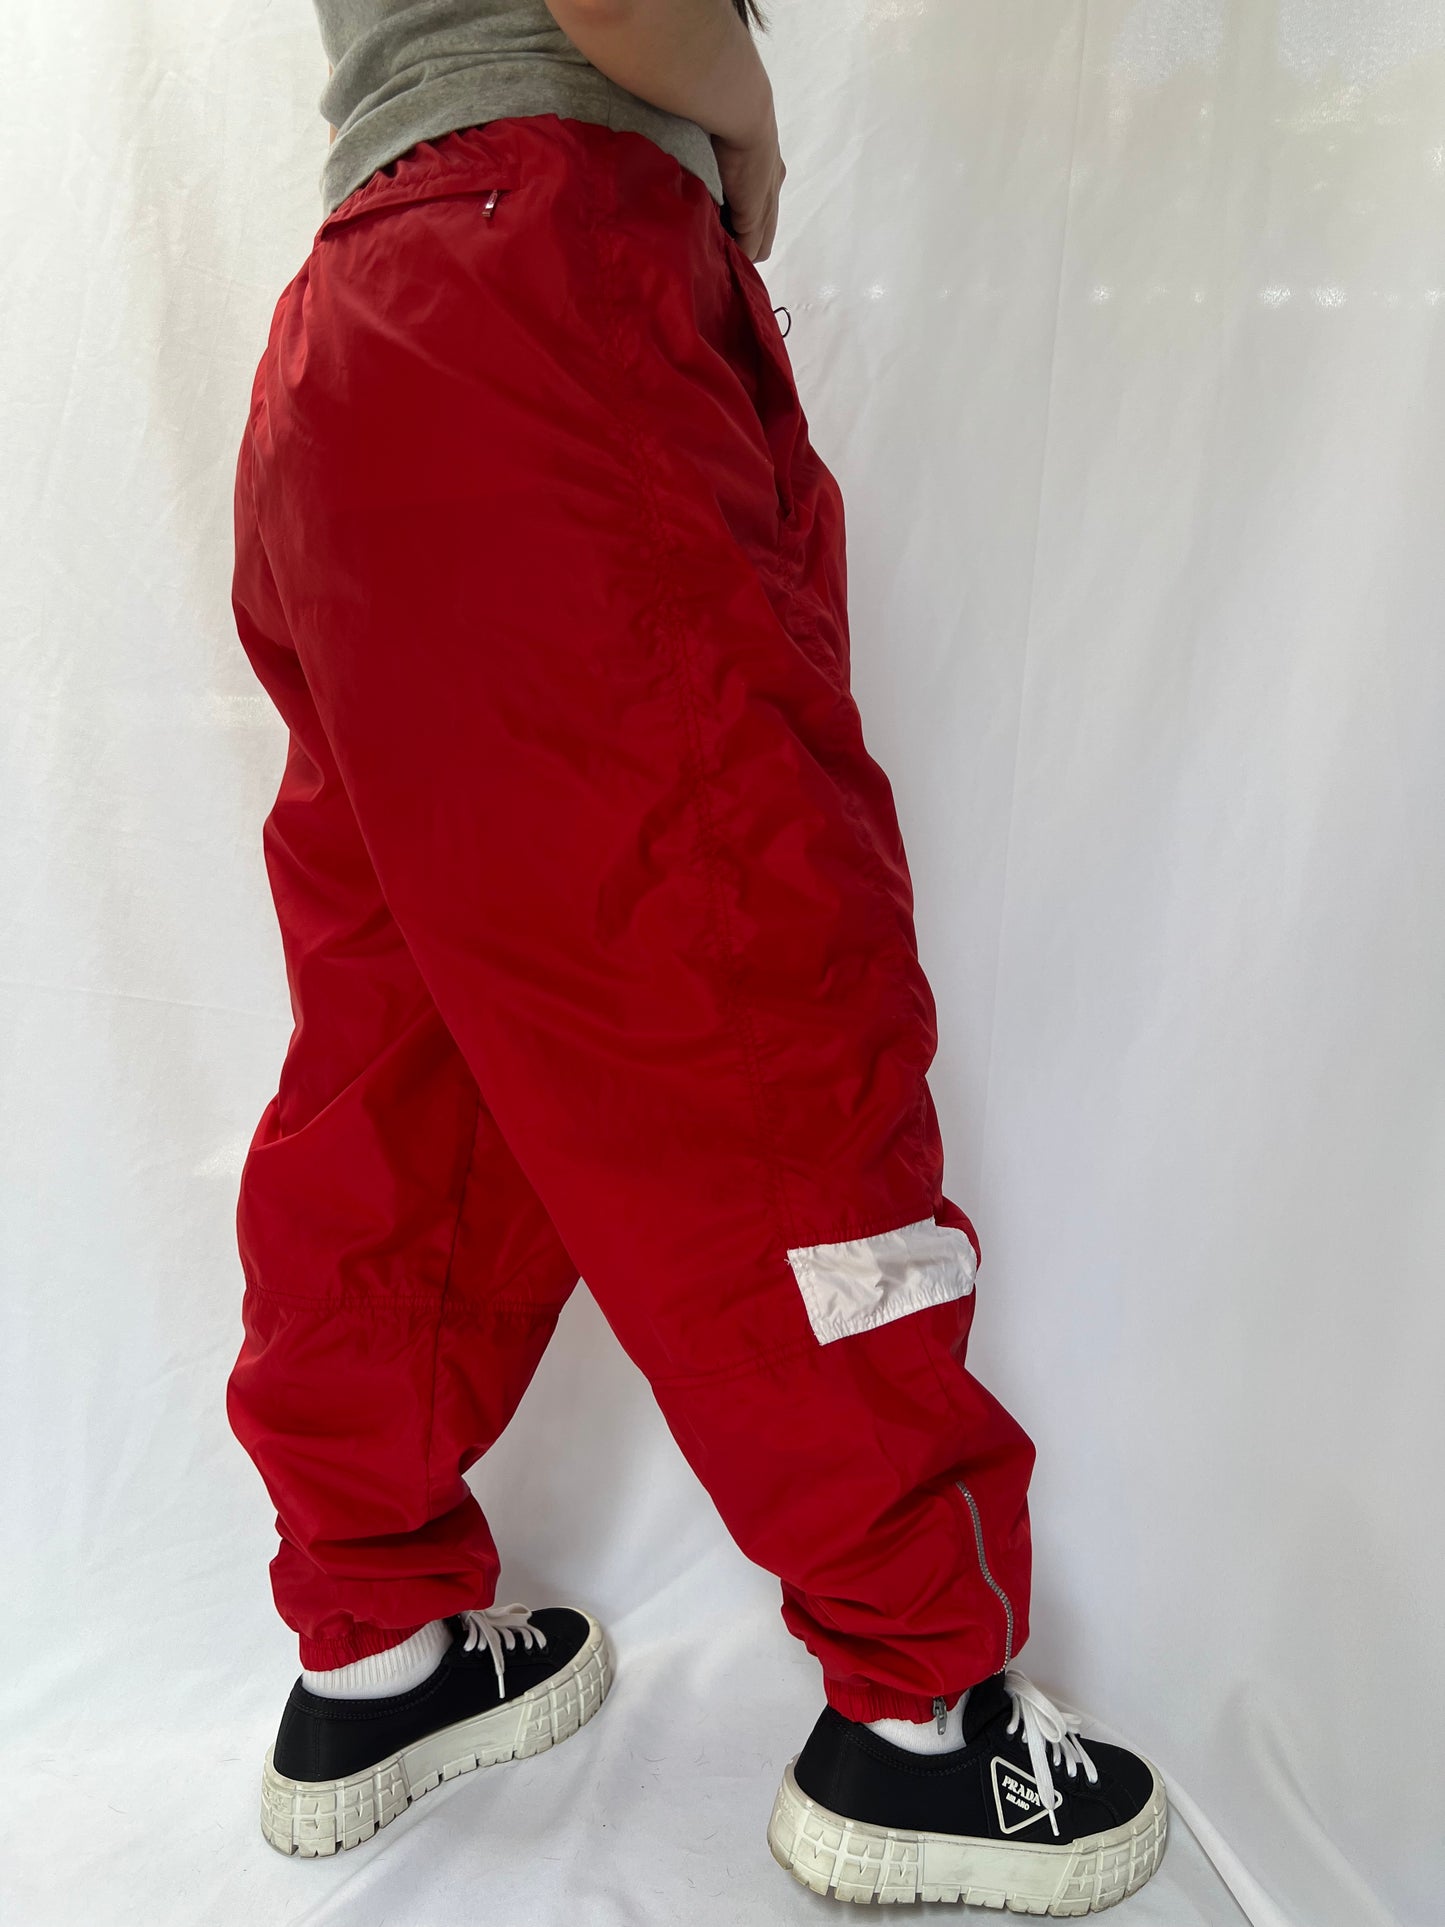 Nike Red/White Nylon Pants - XL